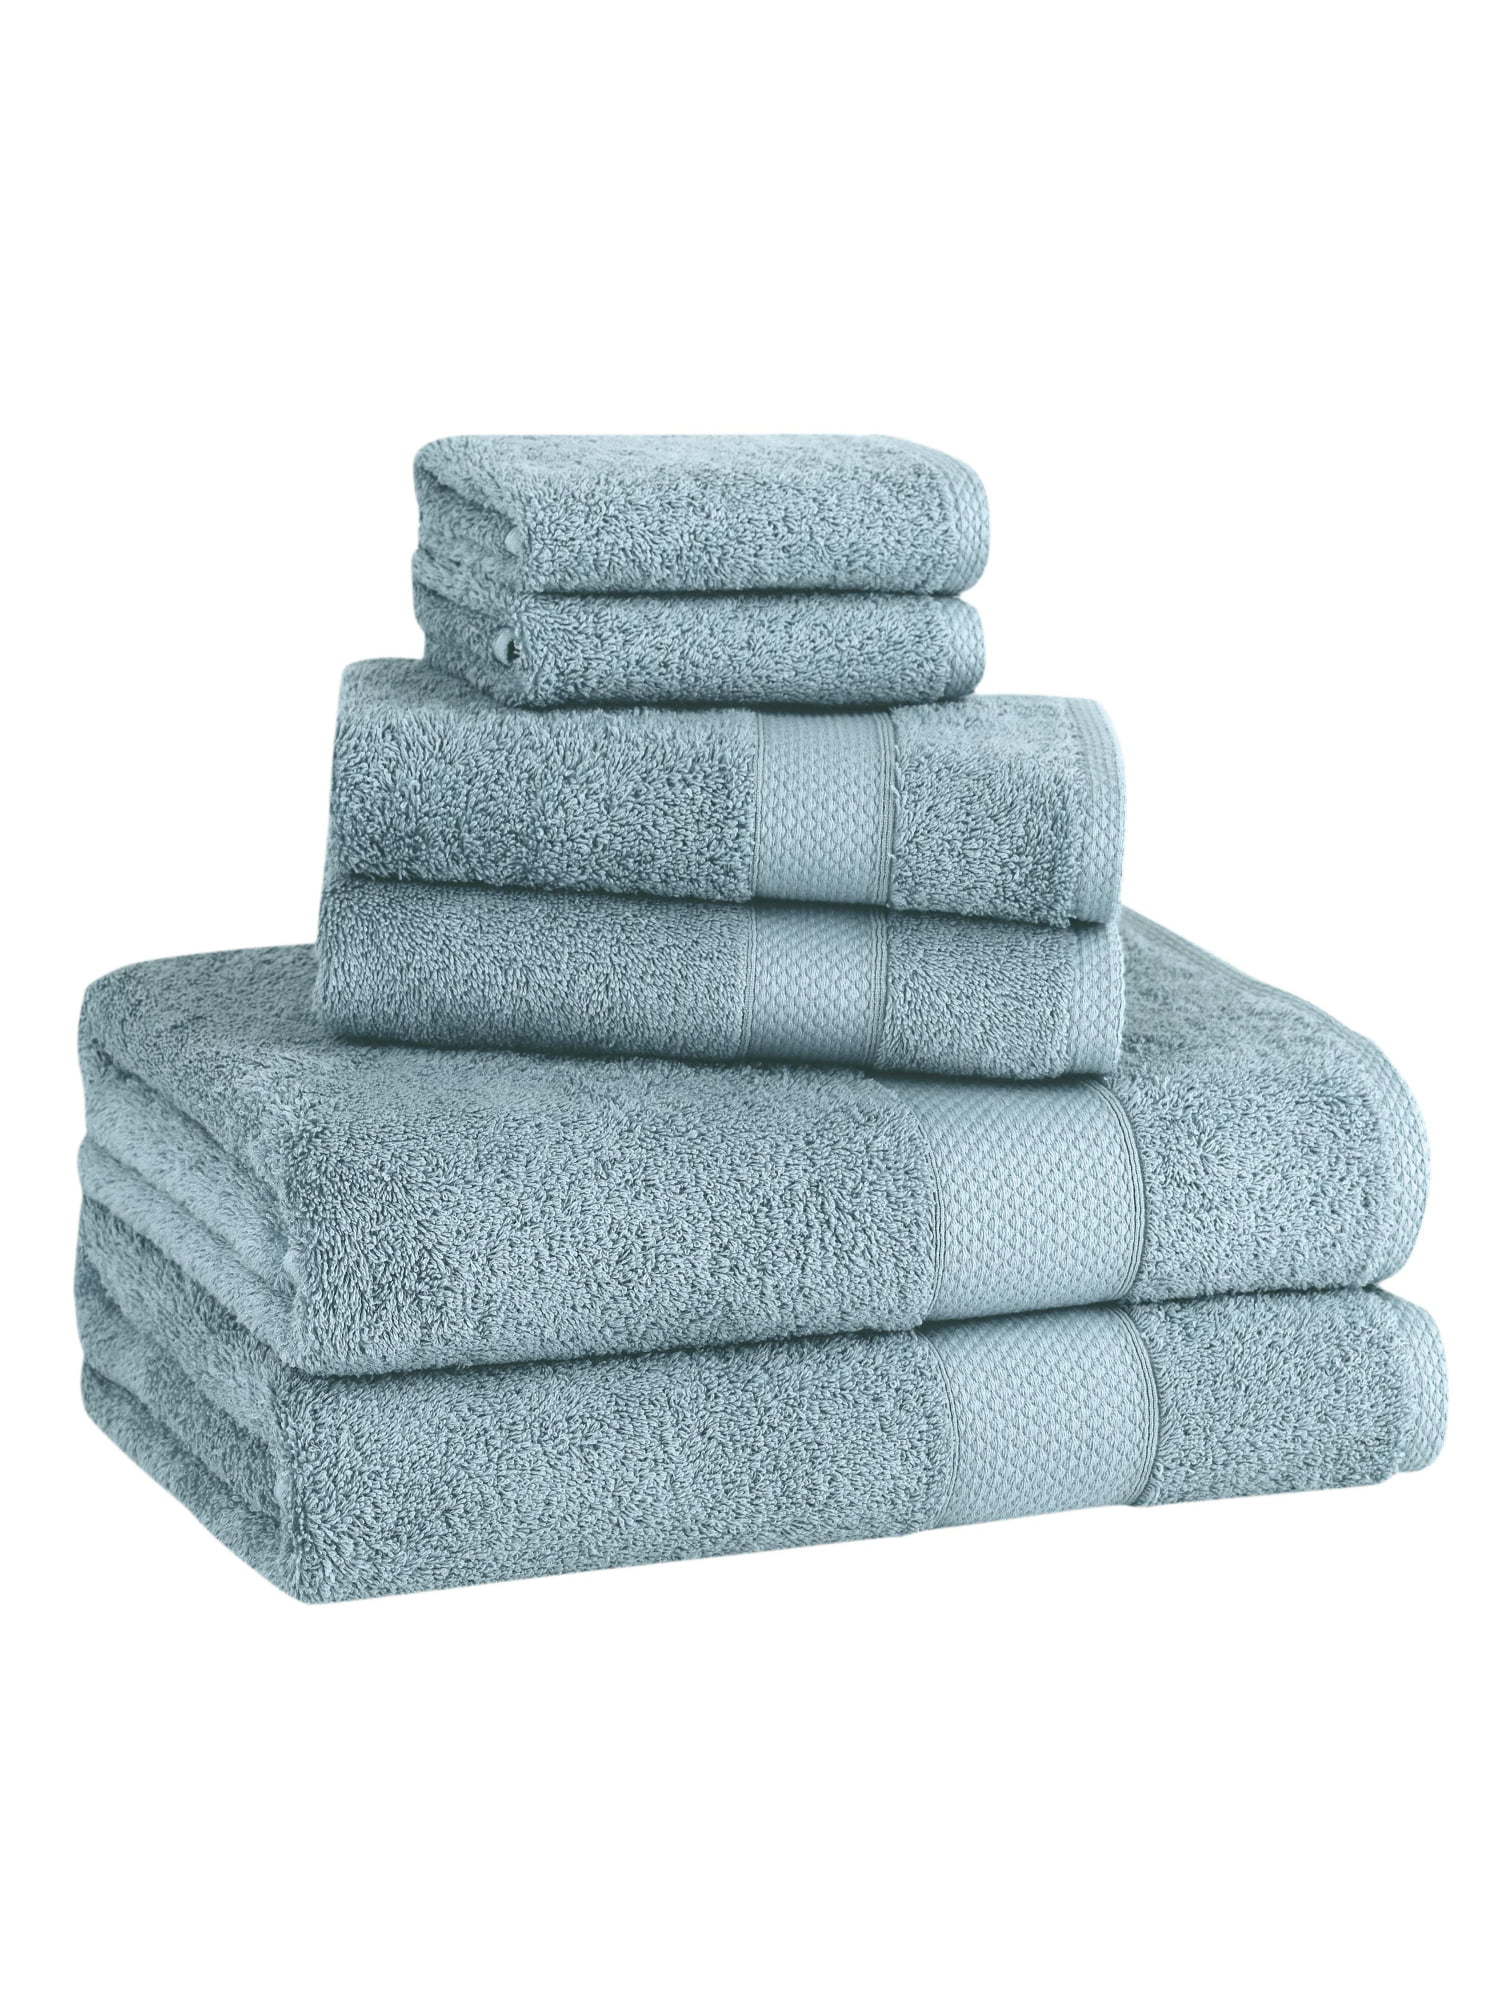 Classic Turkish Towels Genuine Cotton Soft Absorbent Luxury Madison 6 Piece  Set With 2 Bath Towels, 2 Hand Towels, 2 Washcloths - Walmart.com